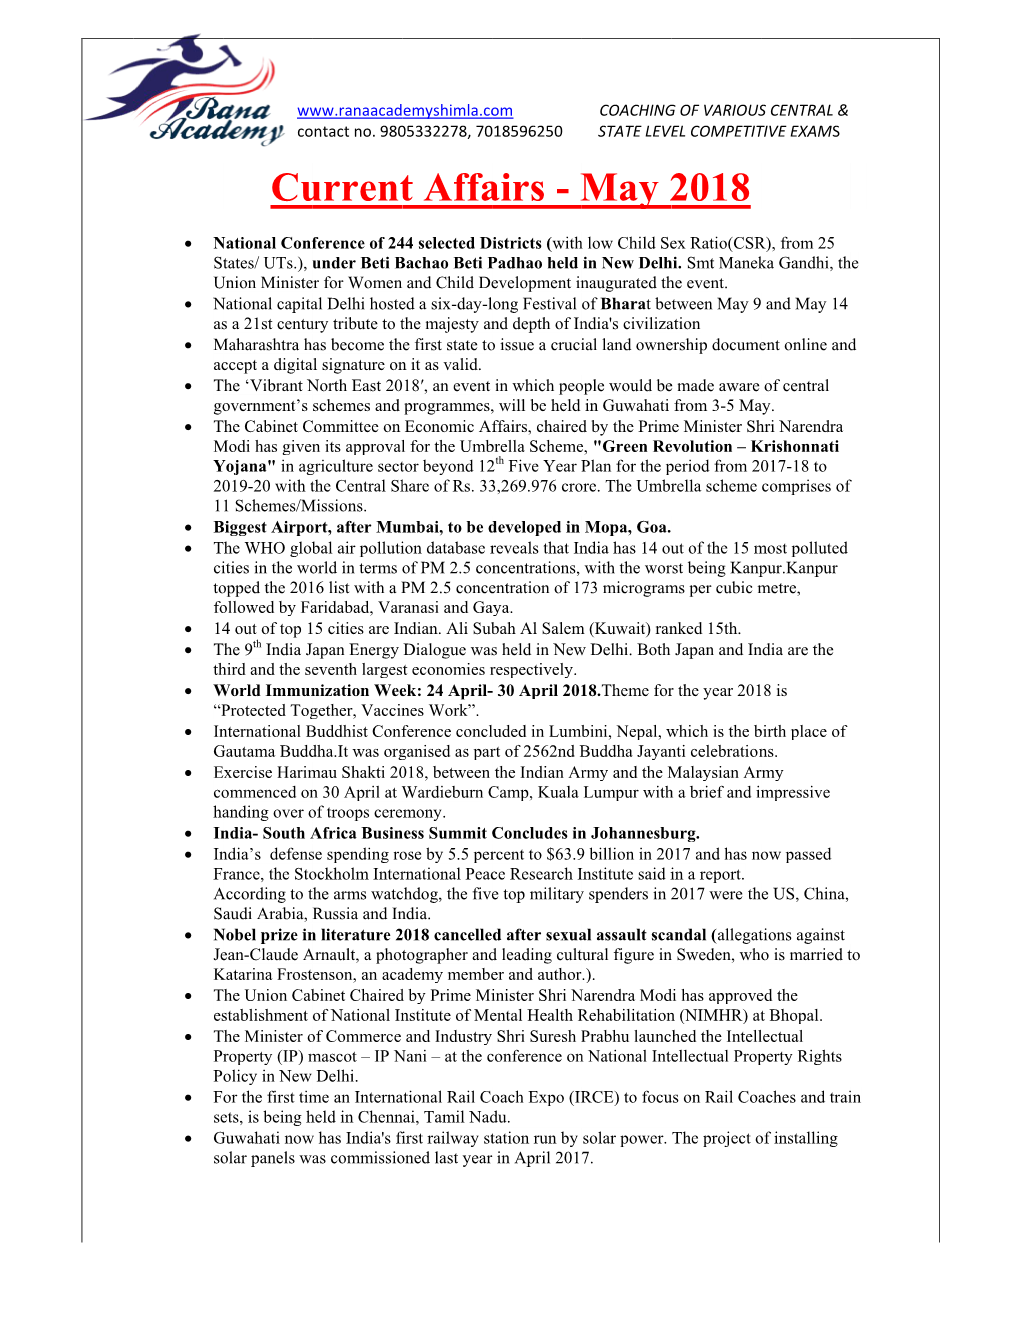 Urrent Affairs - May 2018